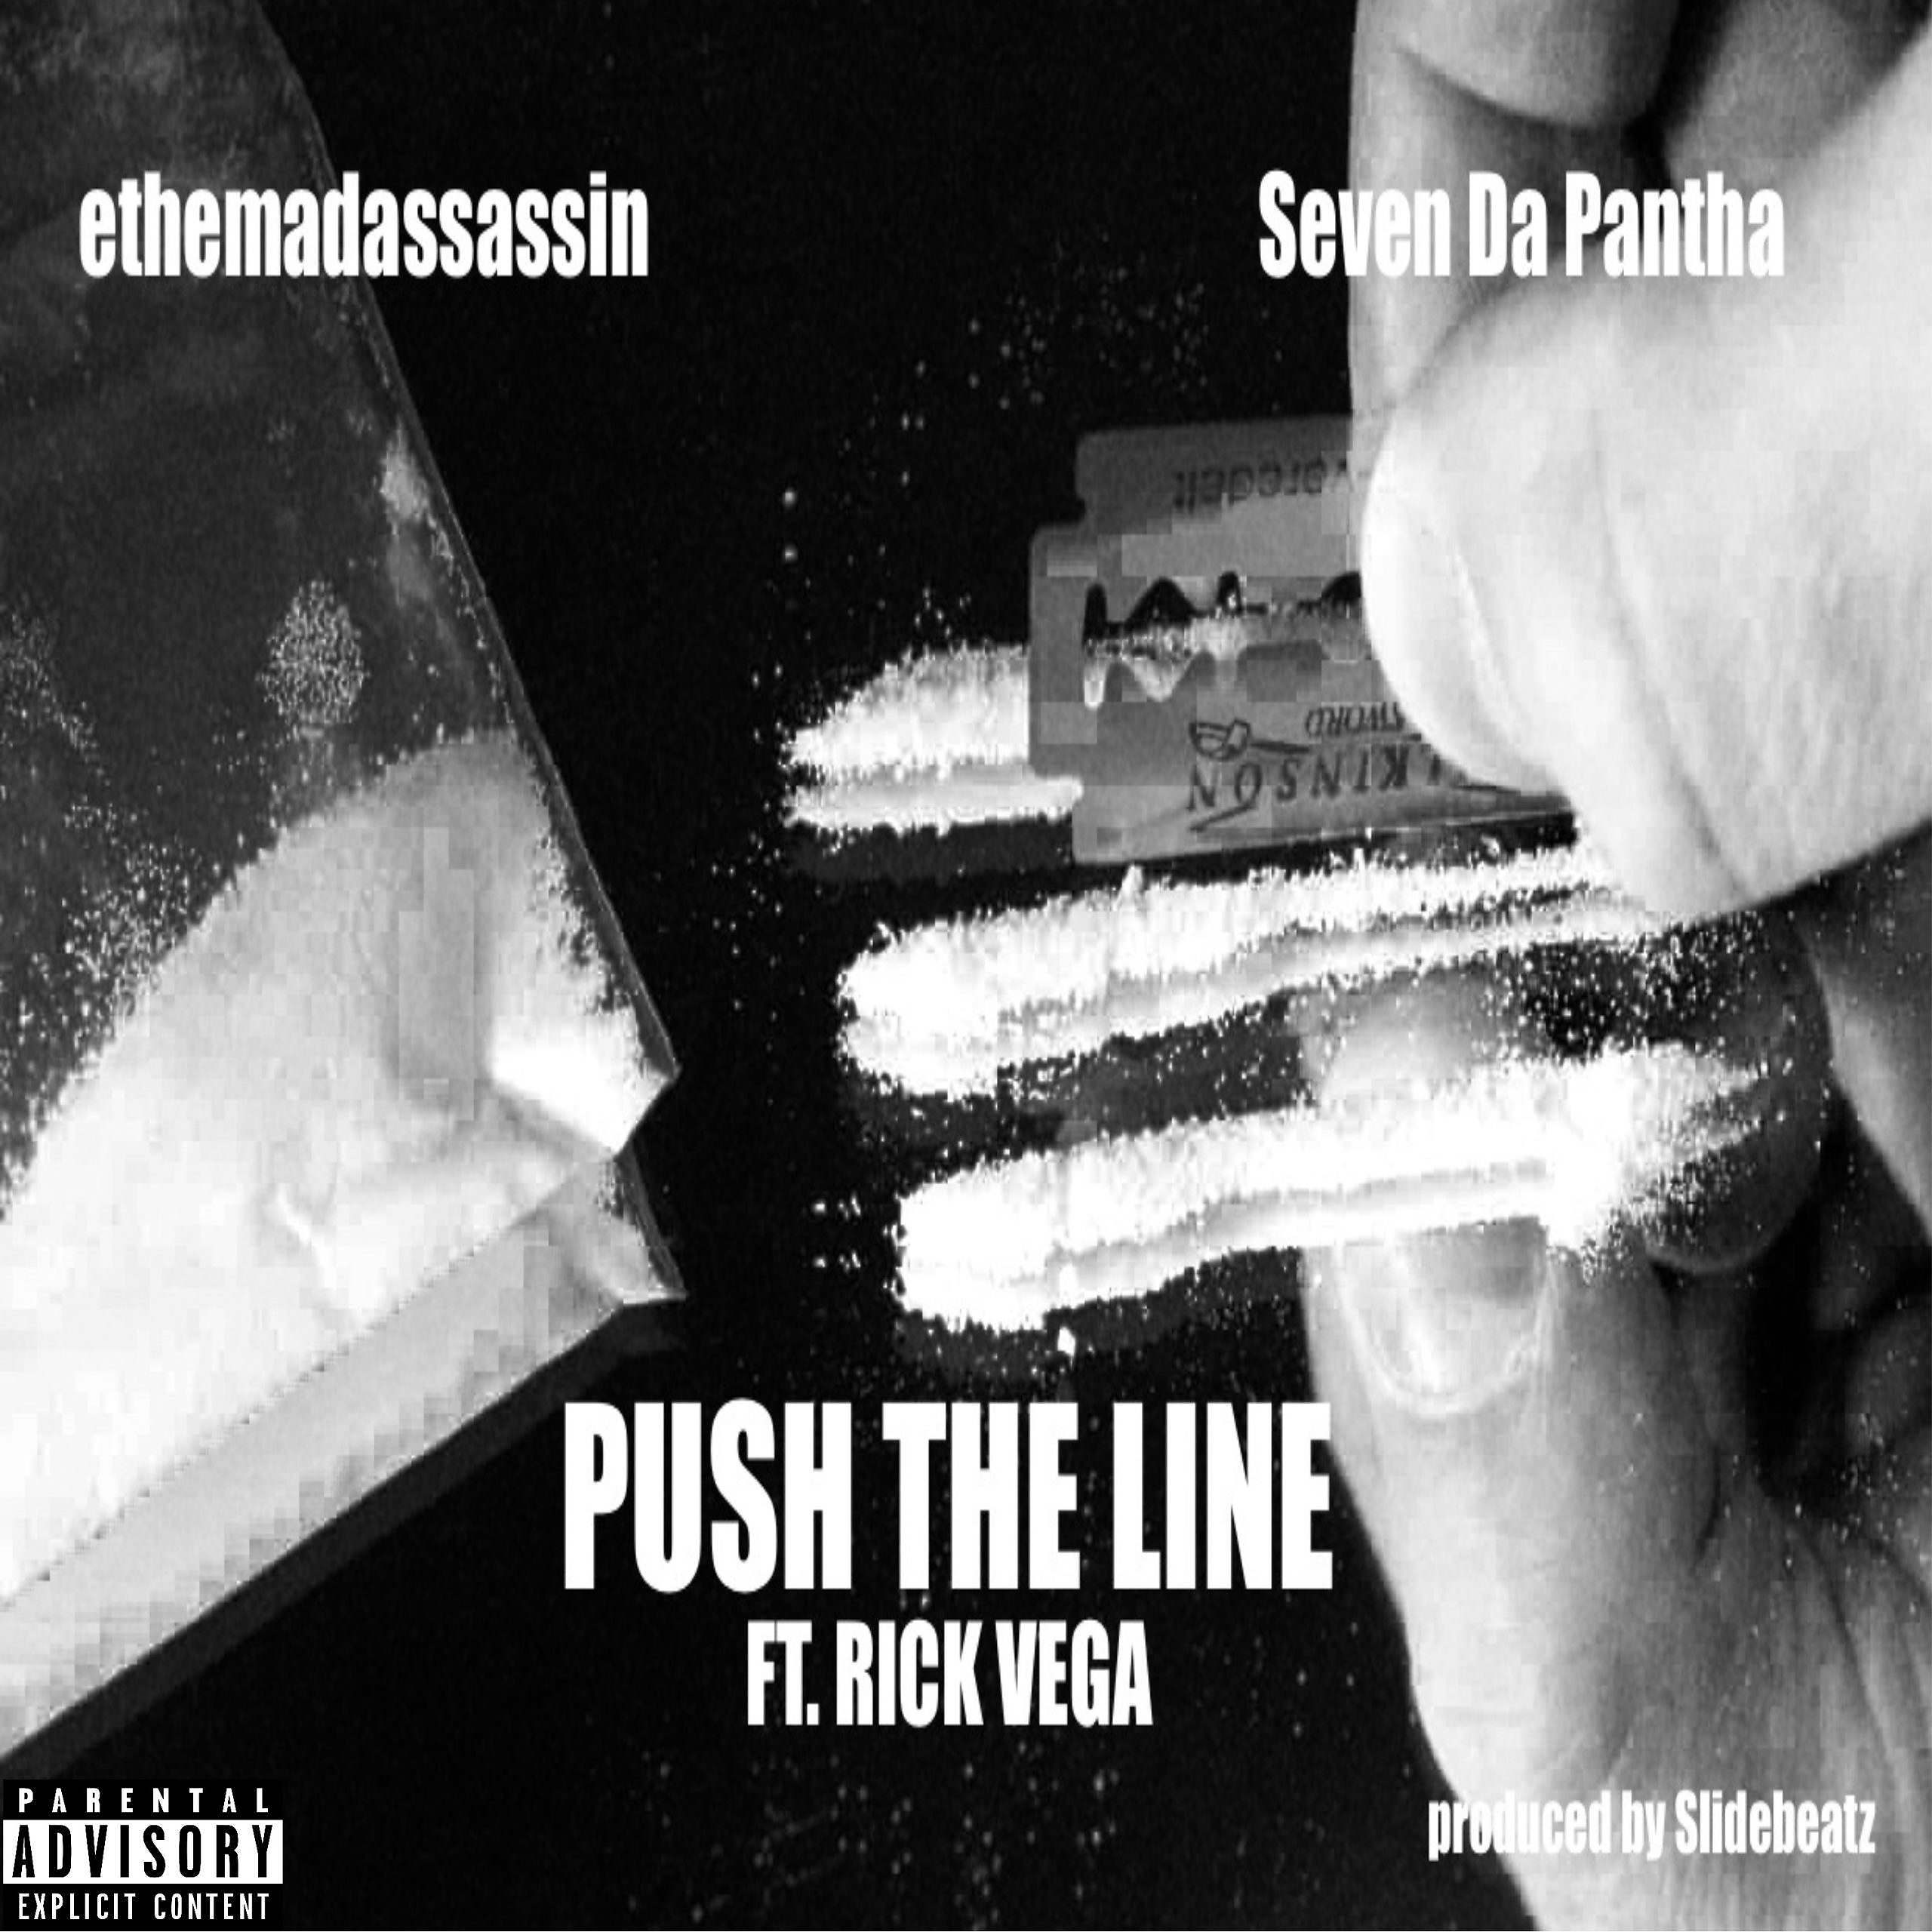 Video: ethemadassassin & Seven Da Pantha feat. Rick Vega - Push The Line